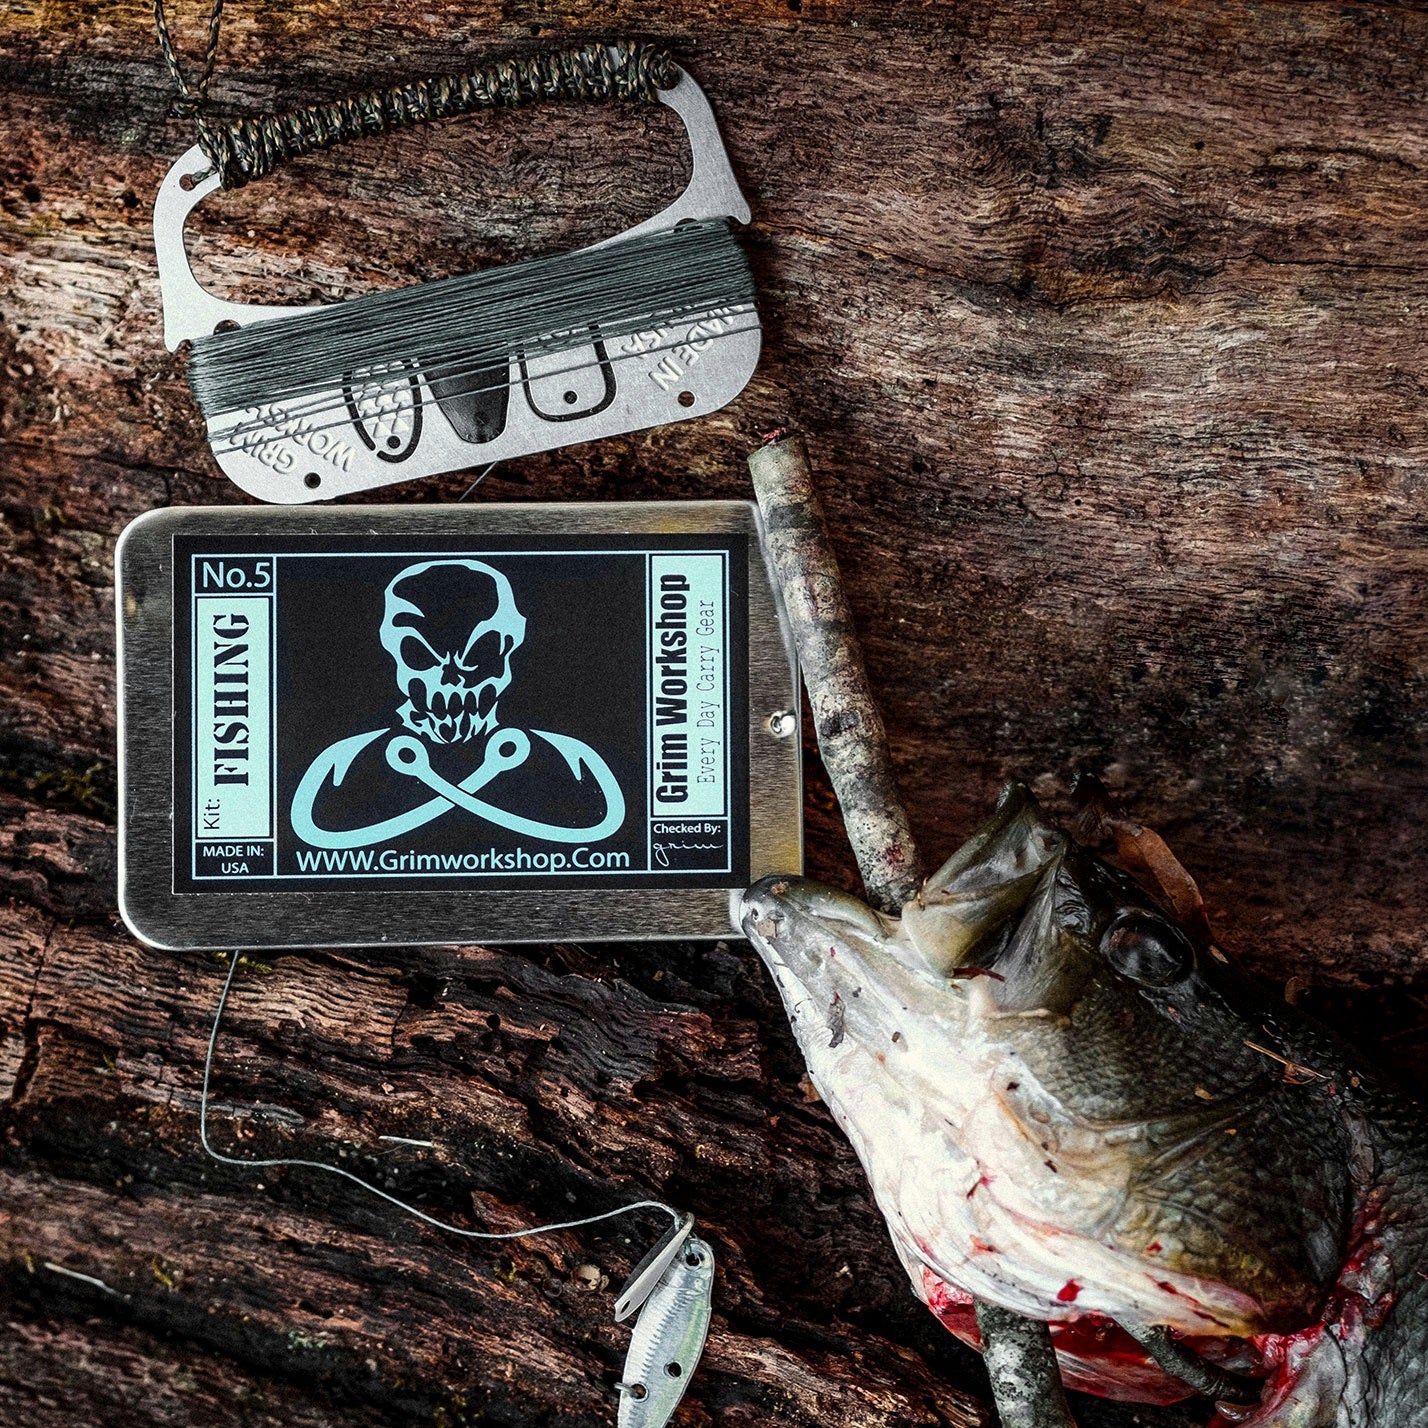 Pocket Fishing Kit : Handline Reel and Survival Fishing Kit